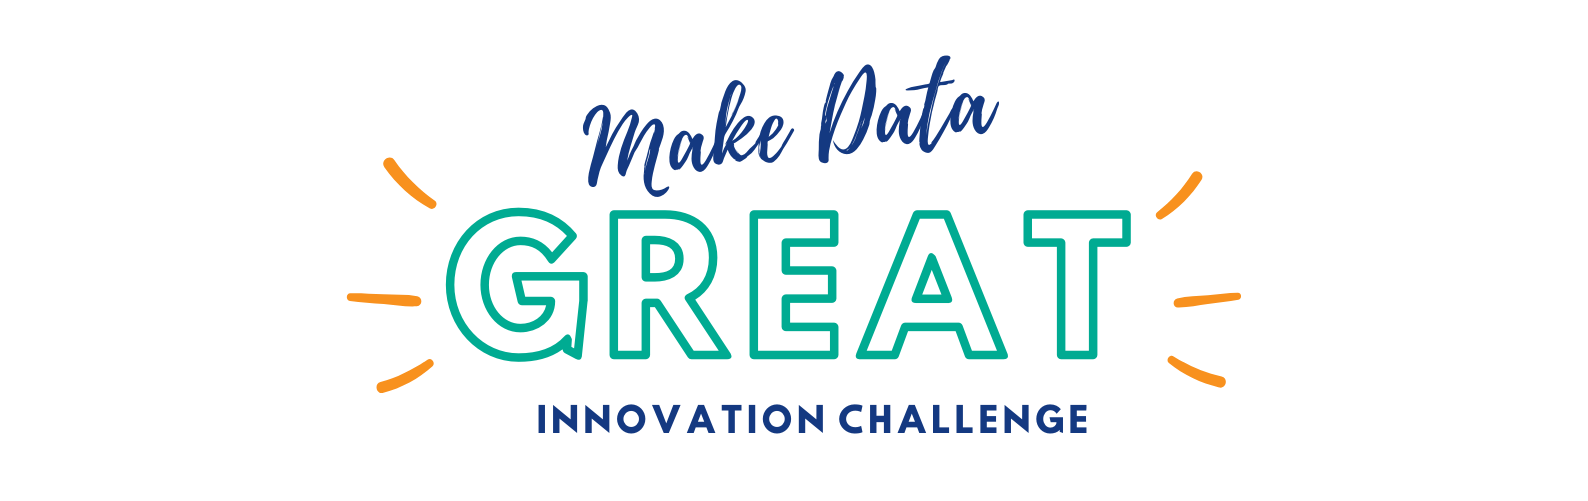 Make Data Great Innovation Challenge Header